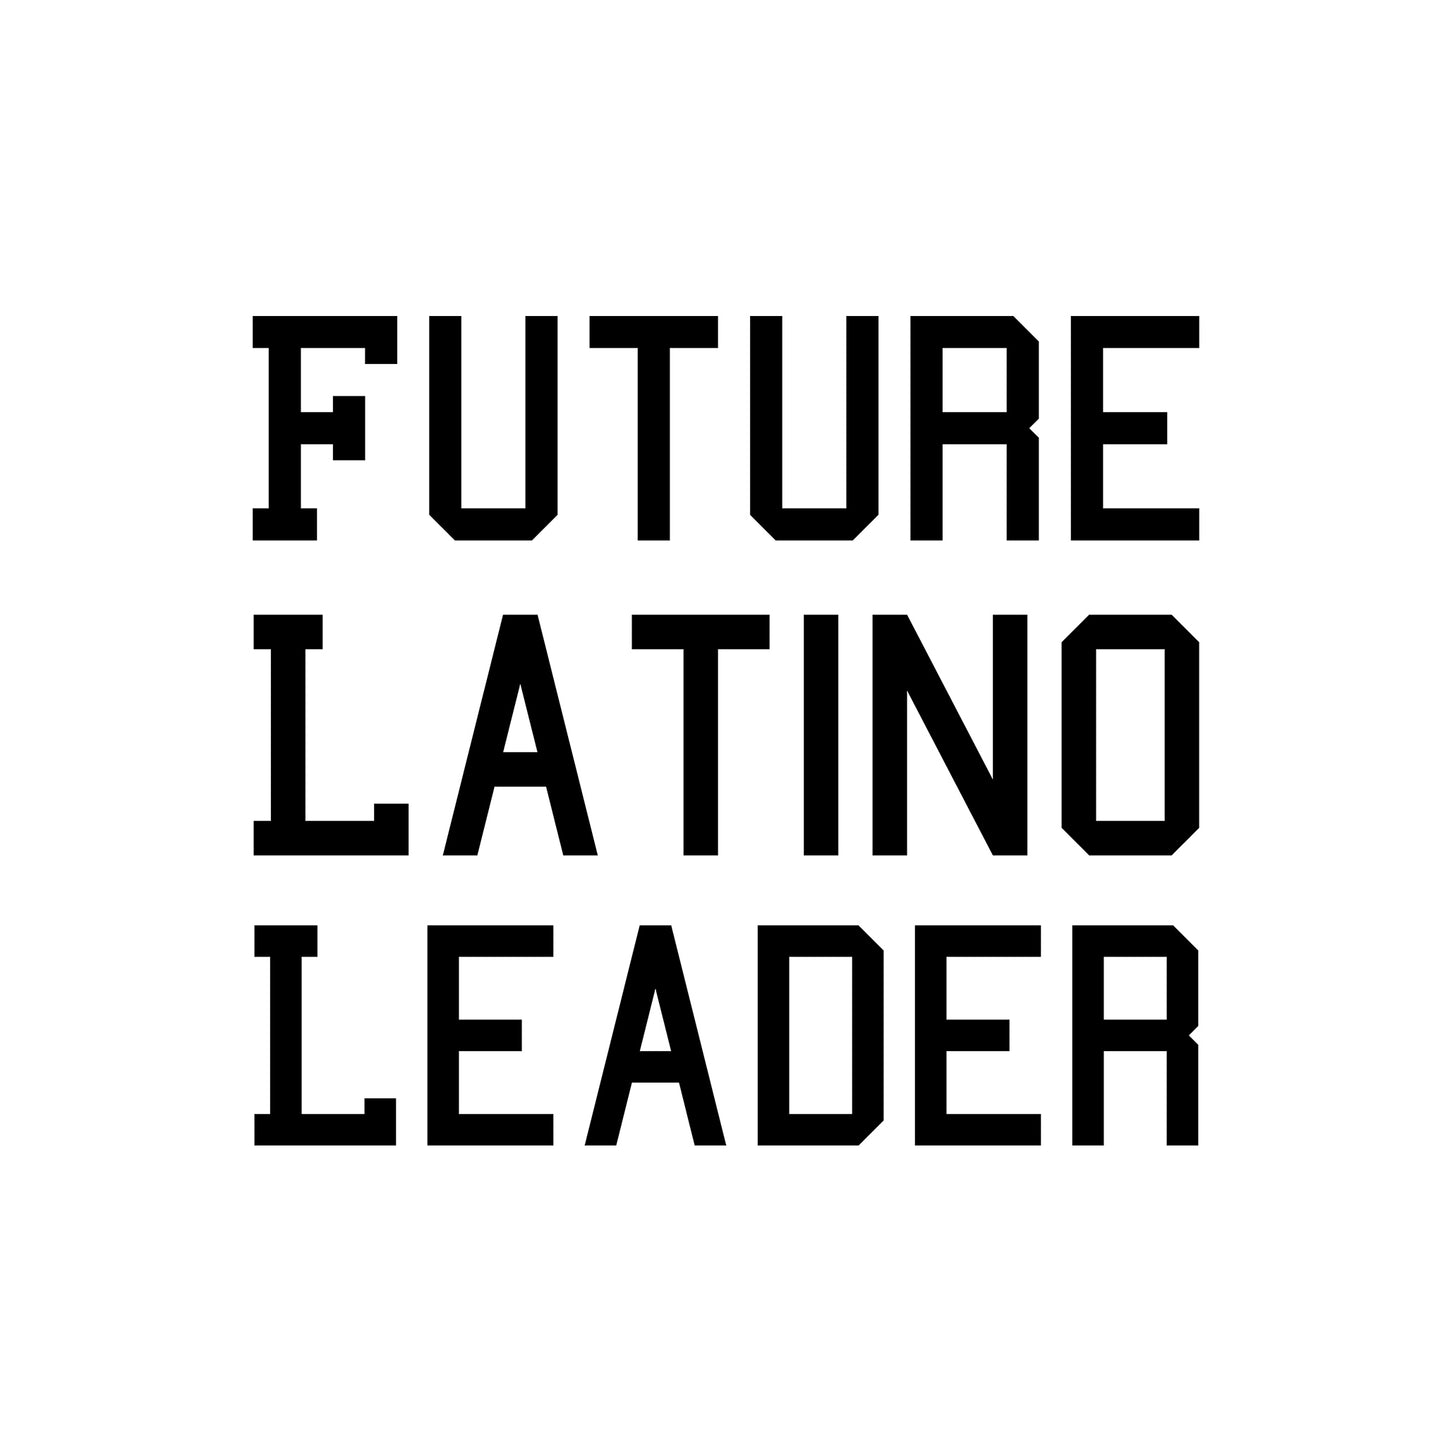 Future Latino Leader